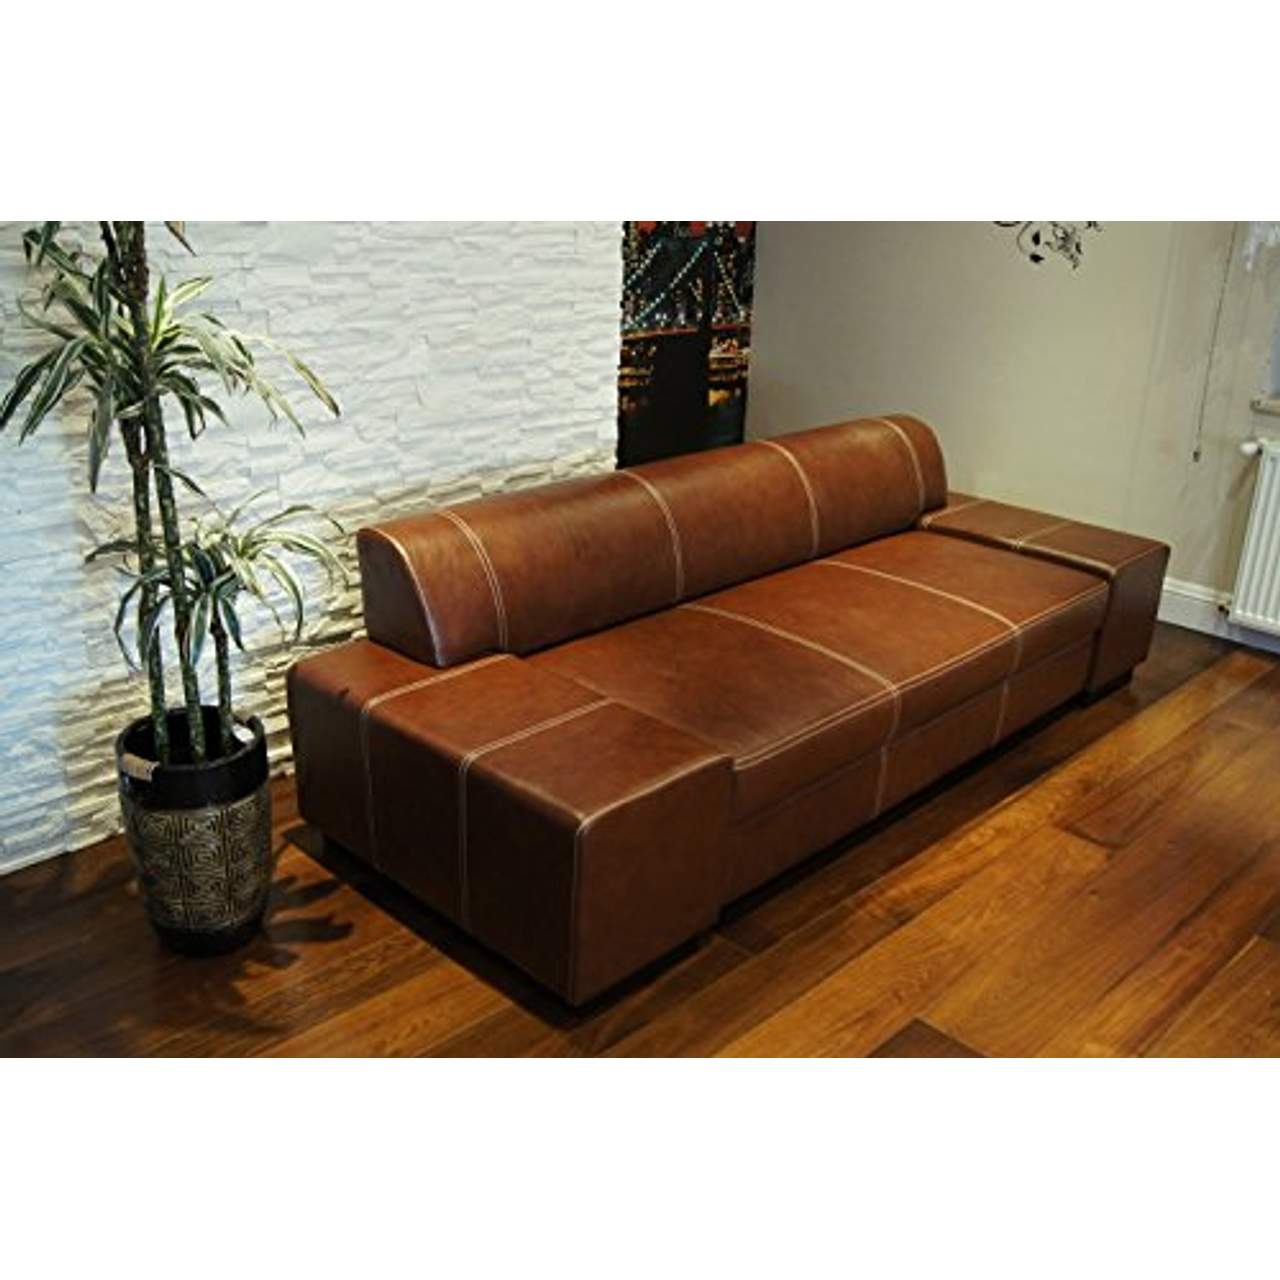 Super Lange Echtleder 3 Sitzer Sofa London Breite 238cm